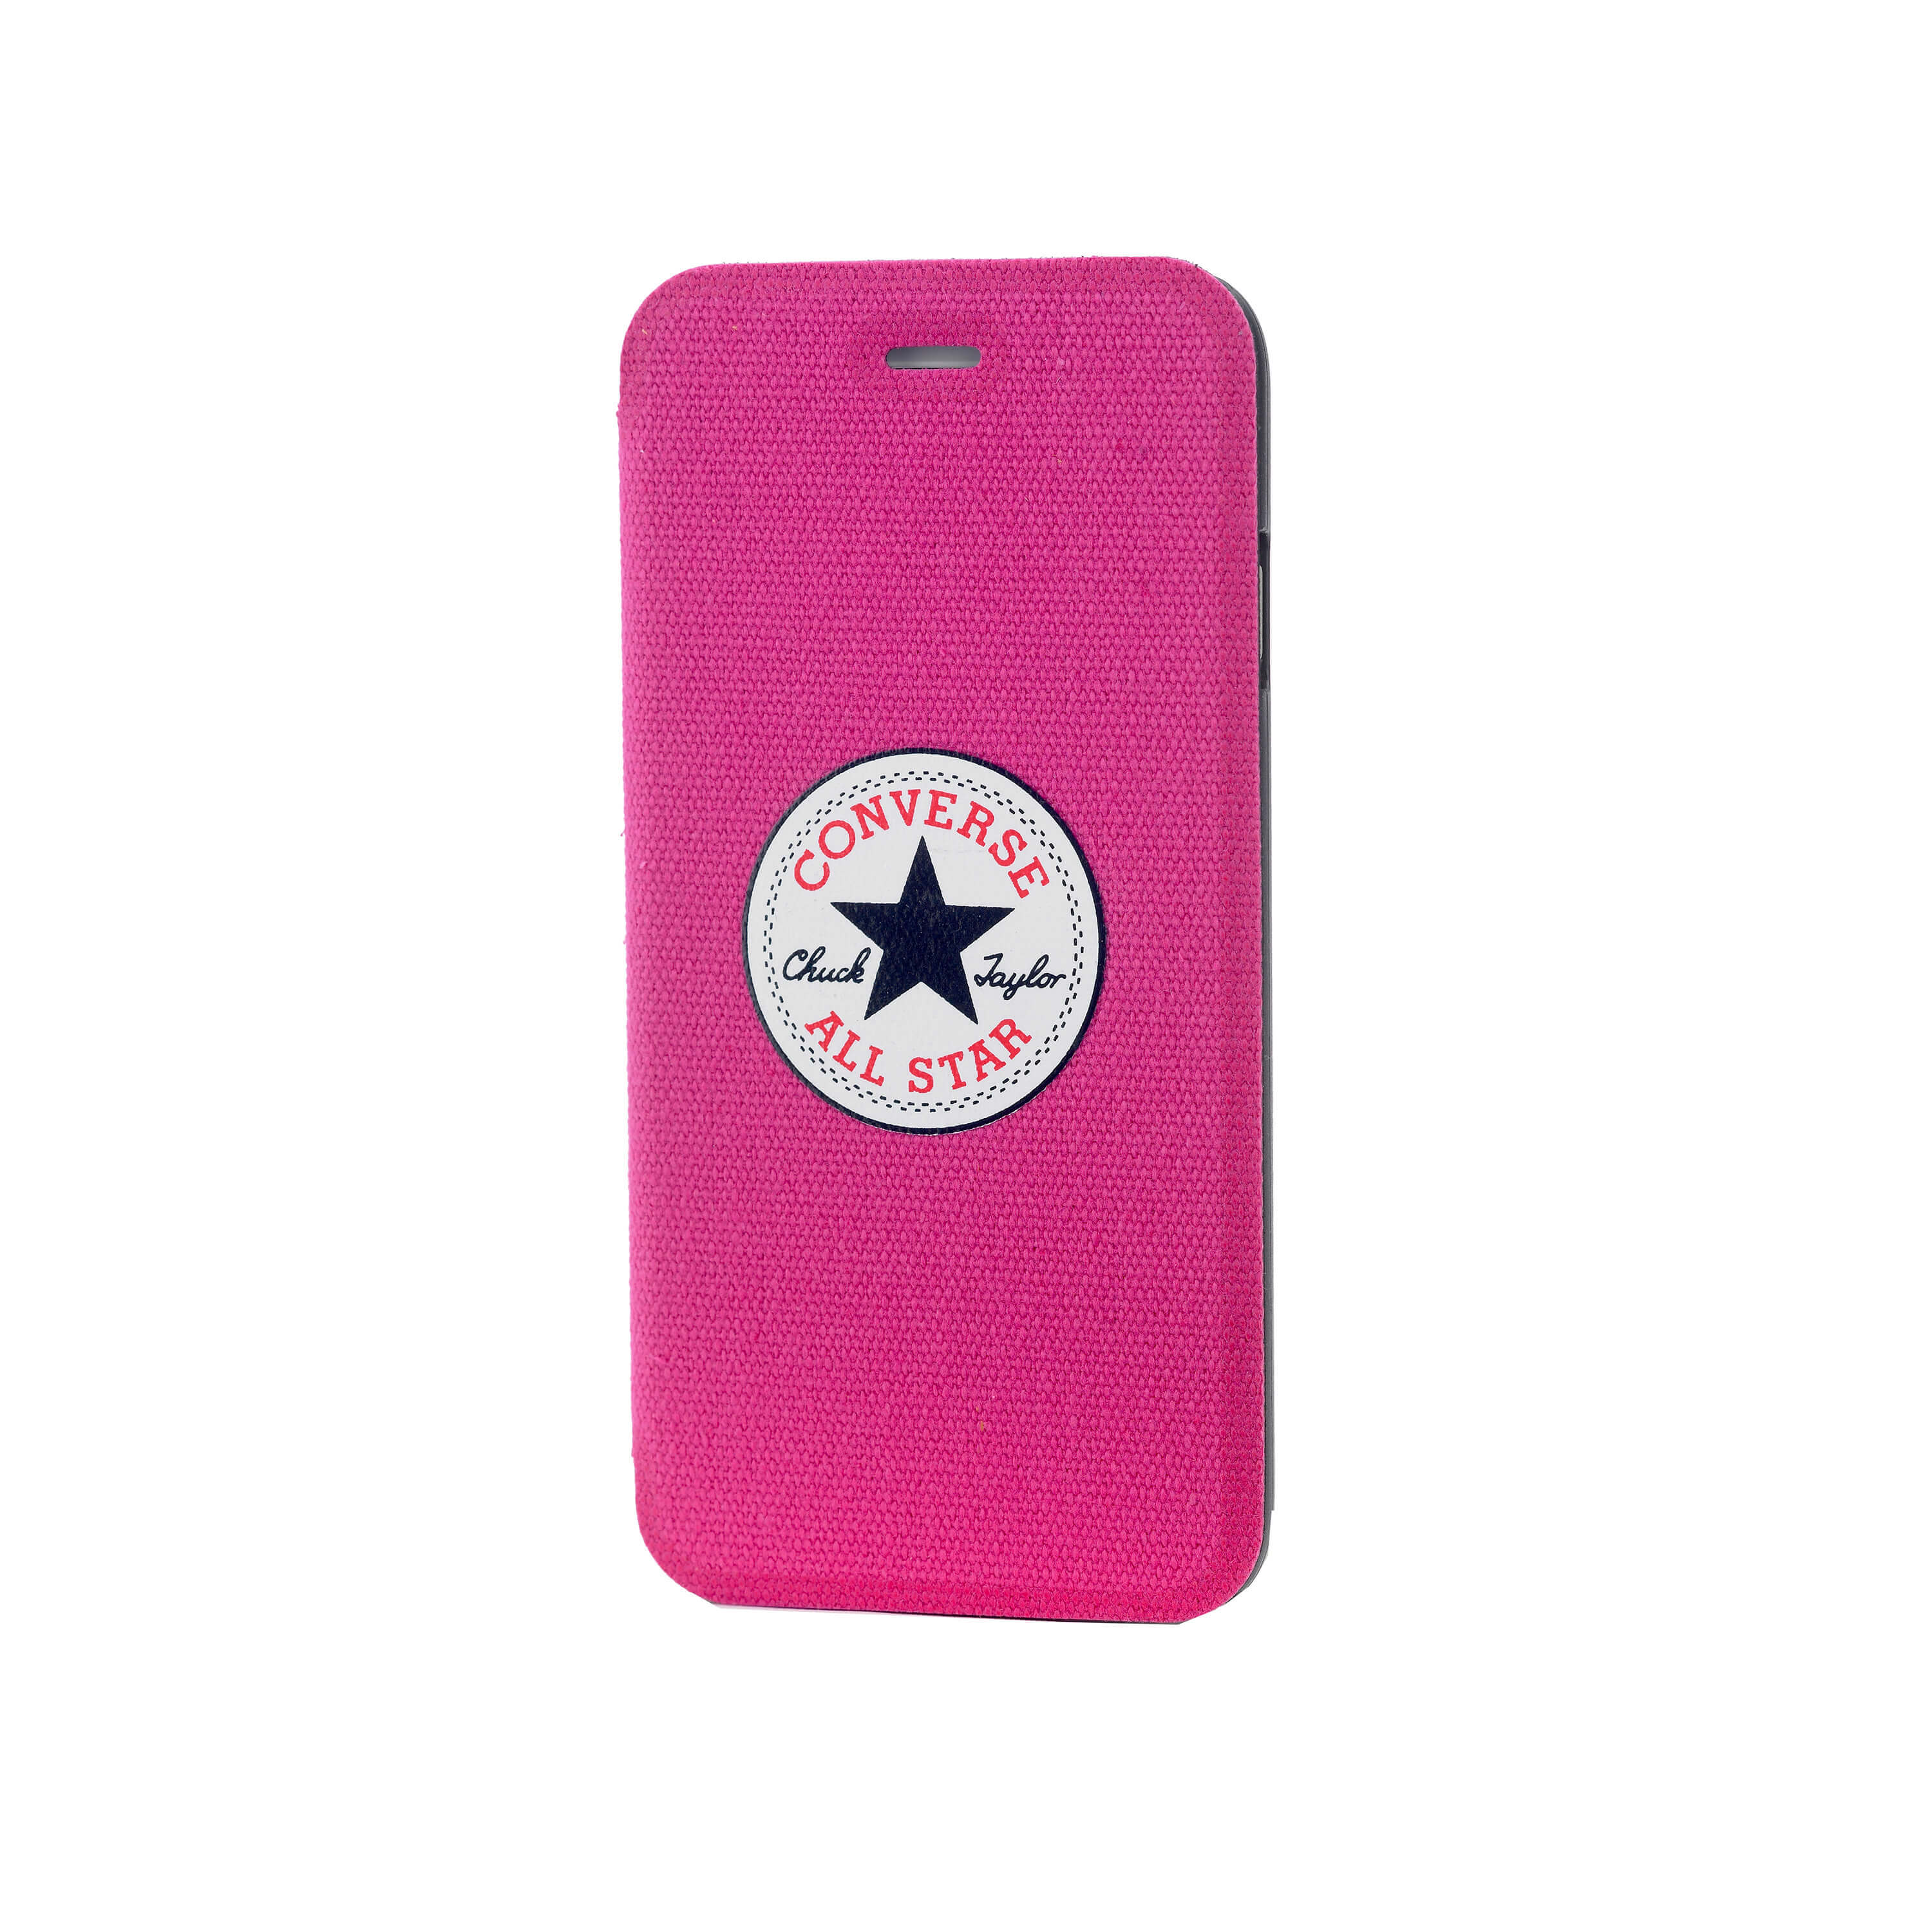 CONVERSE Case Canvas iPhone 6/7/8/SE Pink